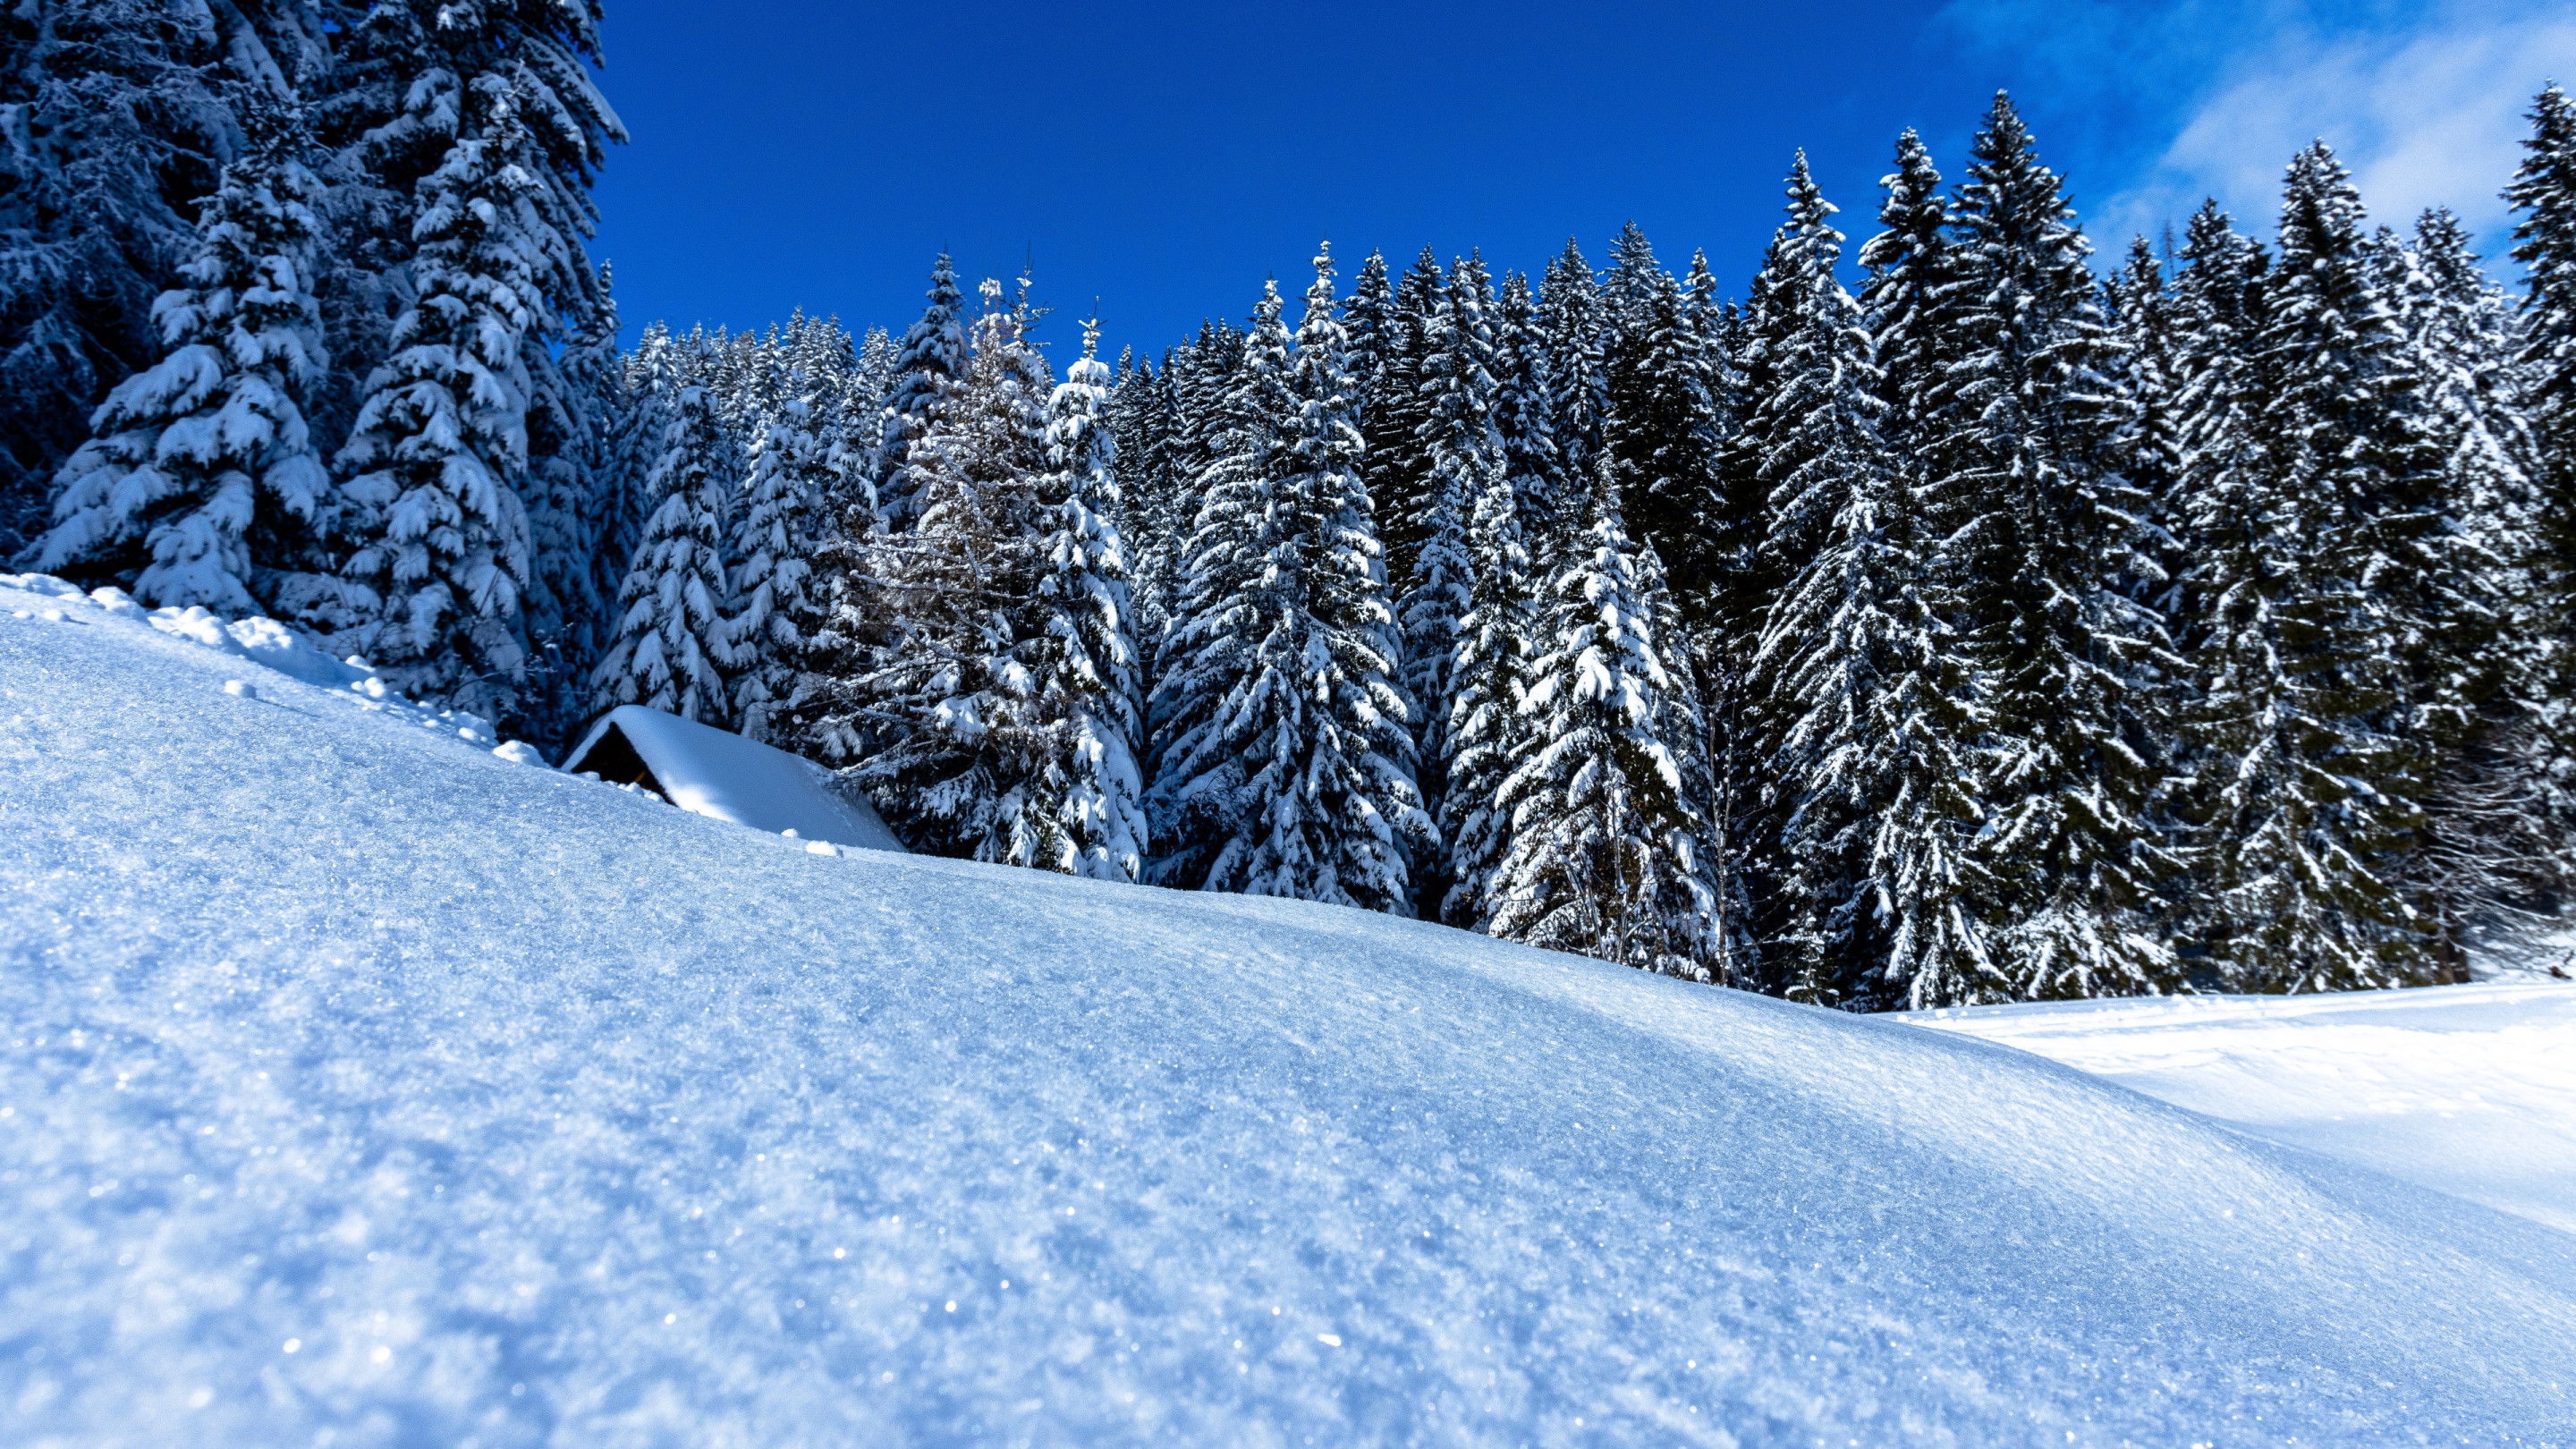 Winter landscape full of snow wallpaper 2880x1620